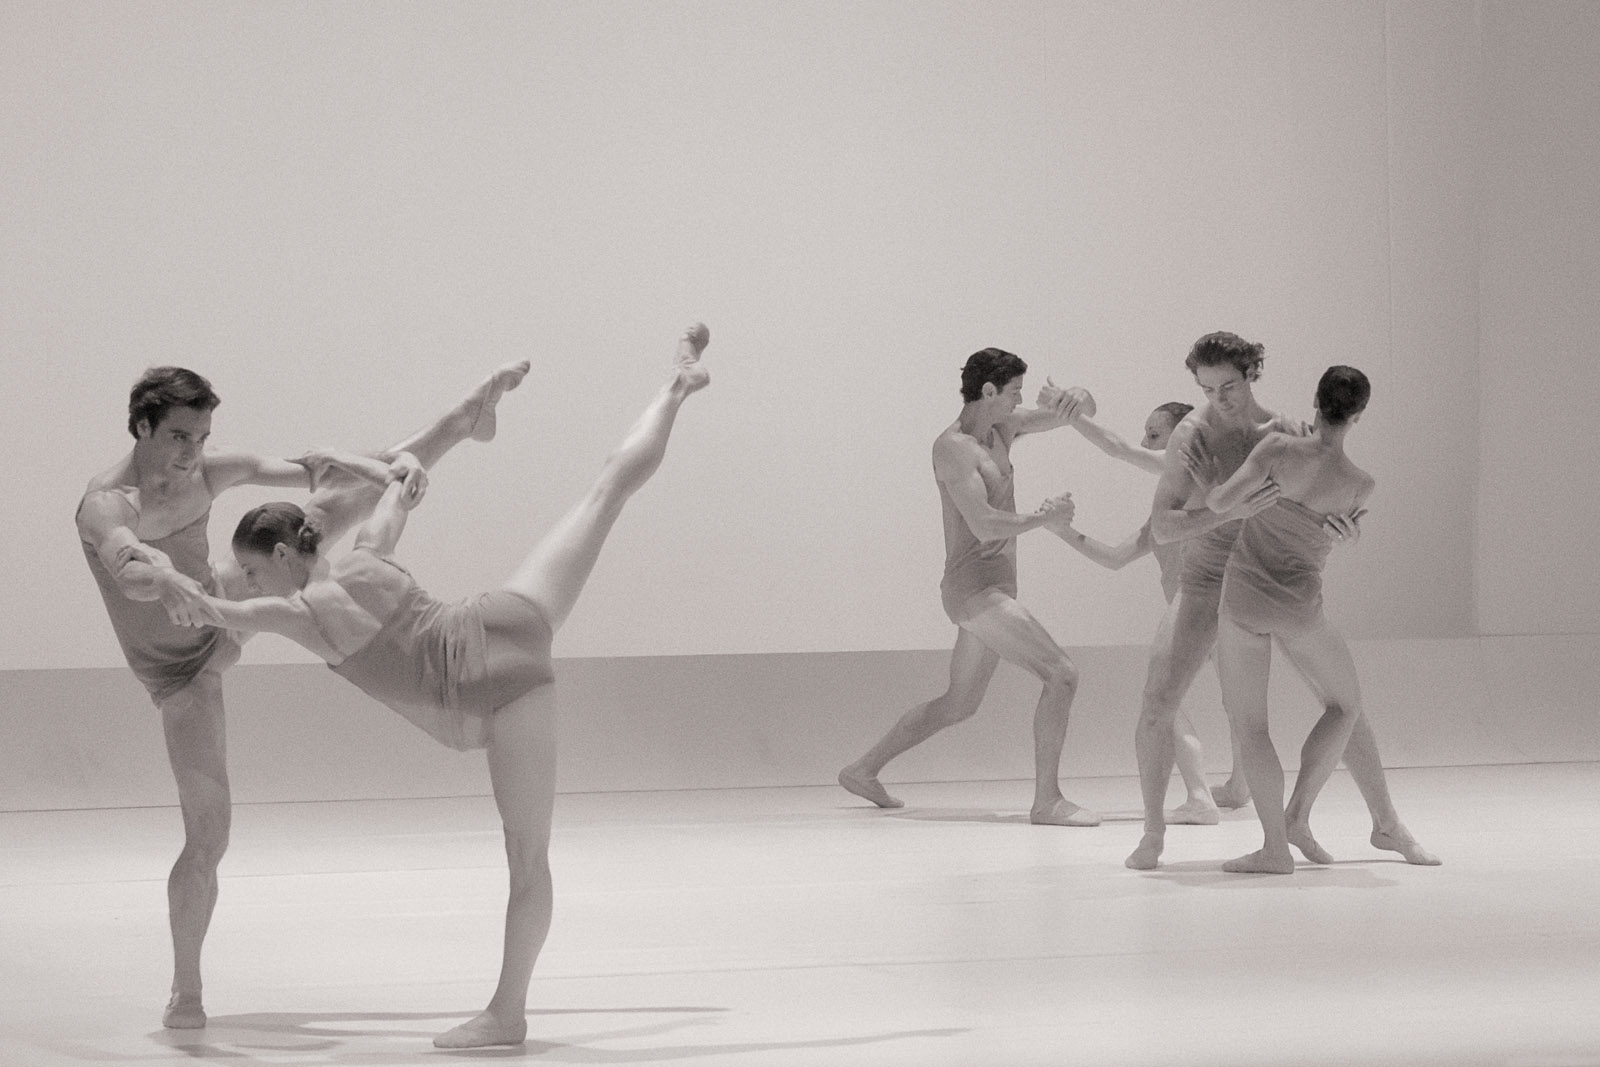 Three dance groups, balck and white - The Australian Ballet - CHROMA - Chorographer Wayne McGregor Photography by Kent Johnson.